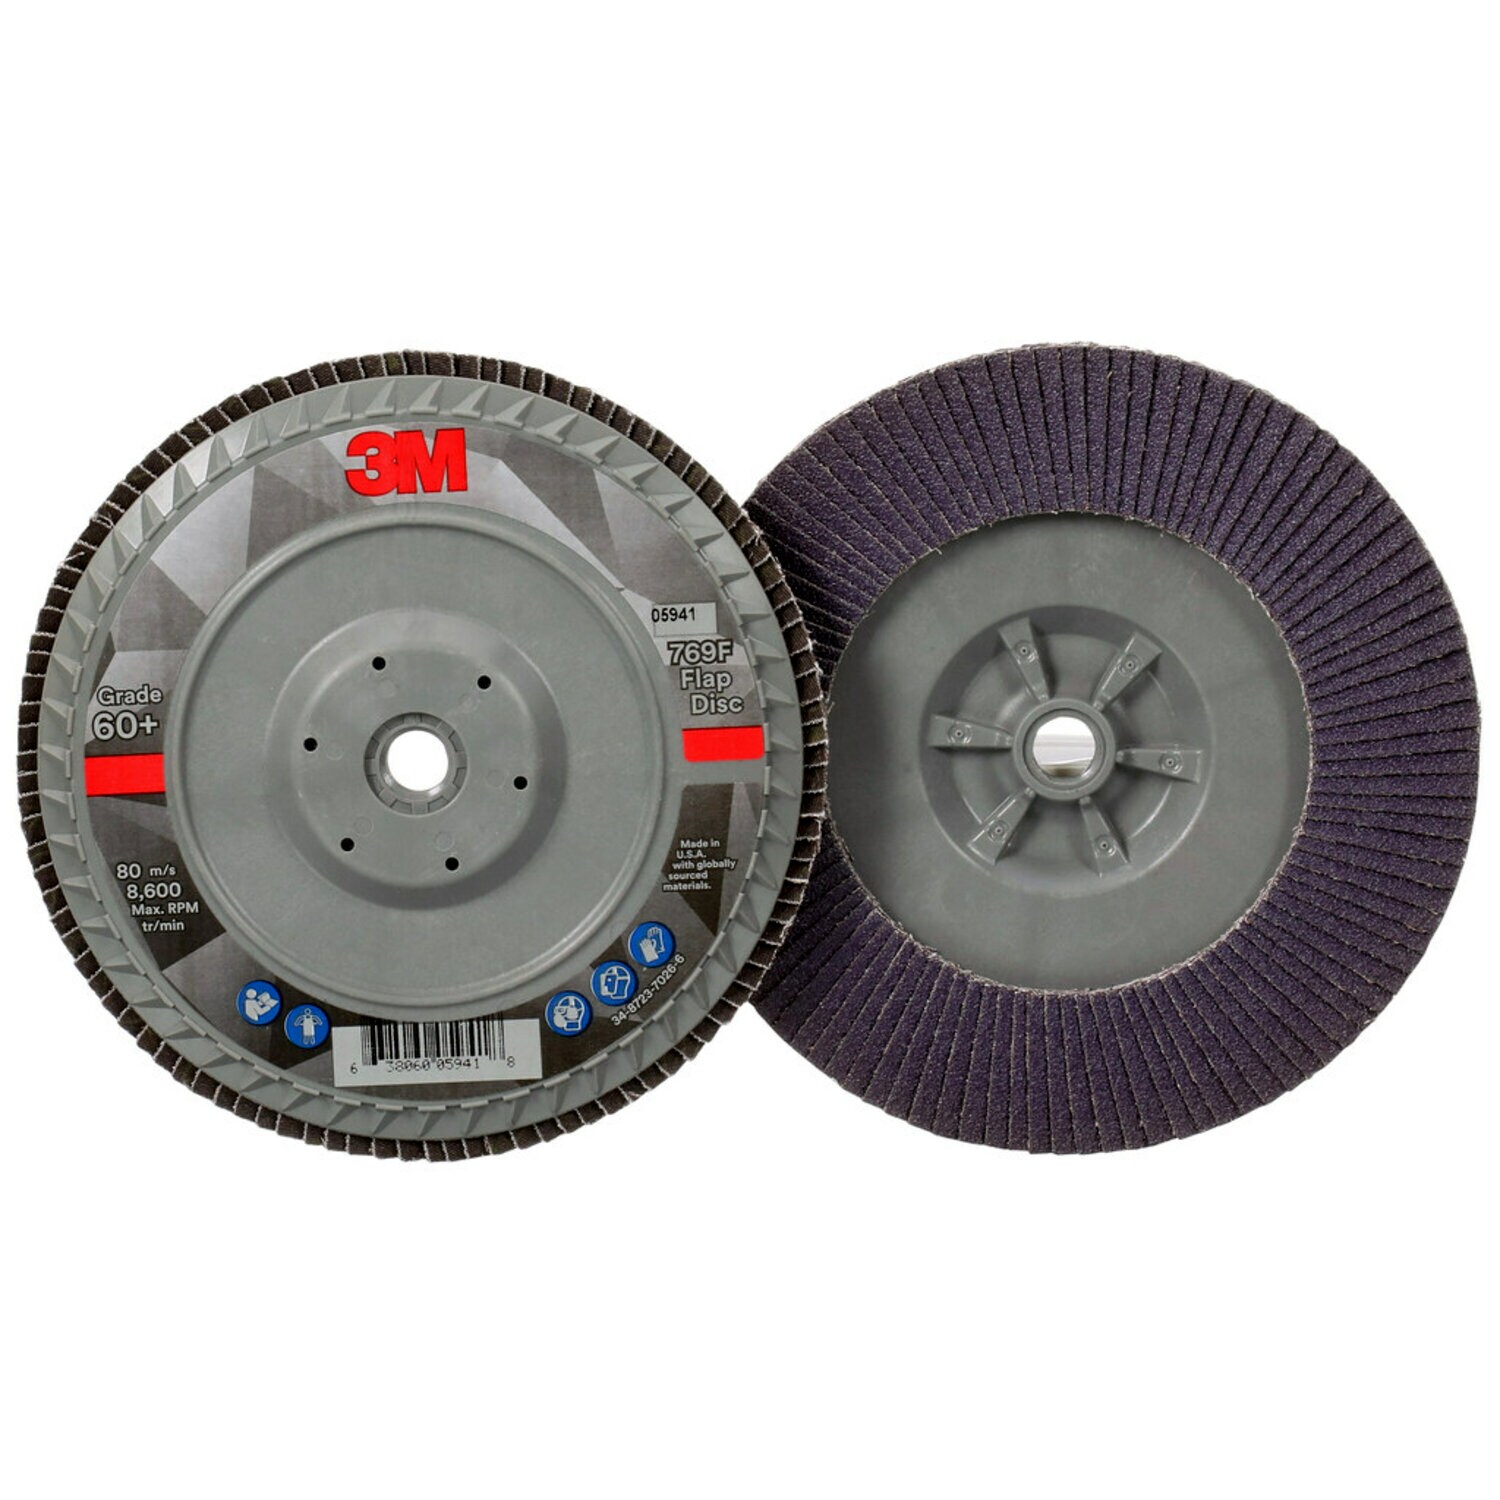 7100178191 - 3M Flap Disc 769F, 60+, T27 Quick Change, 7 in x 5/8 in-11, 5 ea/Case